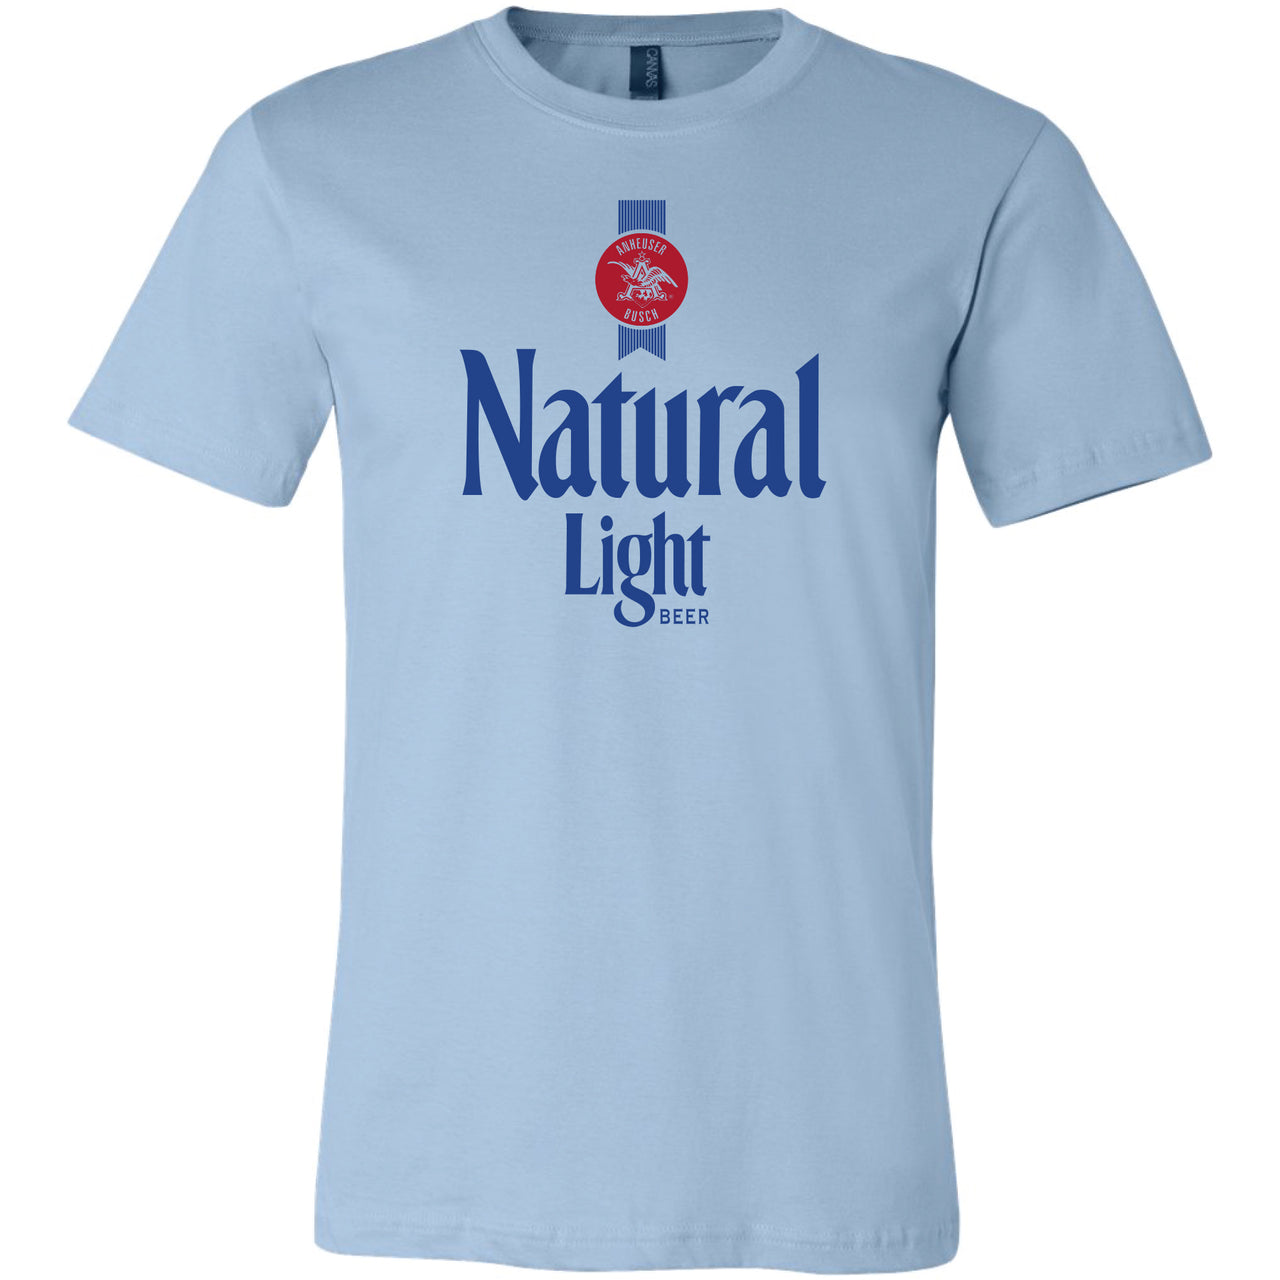 Natural Light Vintage Ribbon Logo T-Shirt